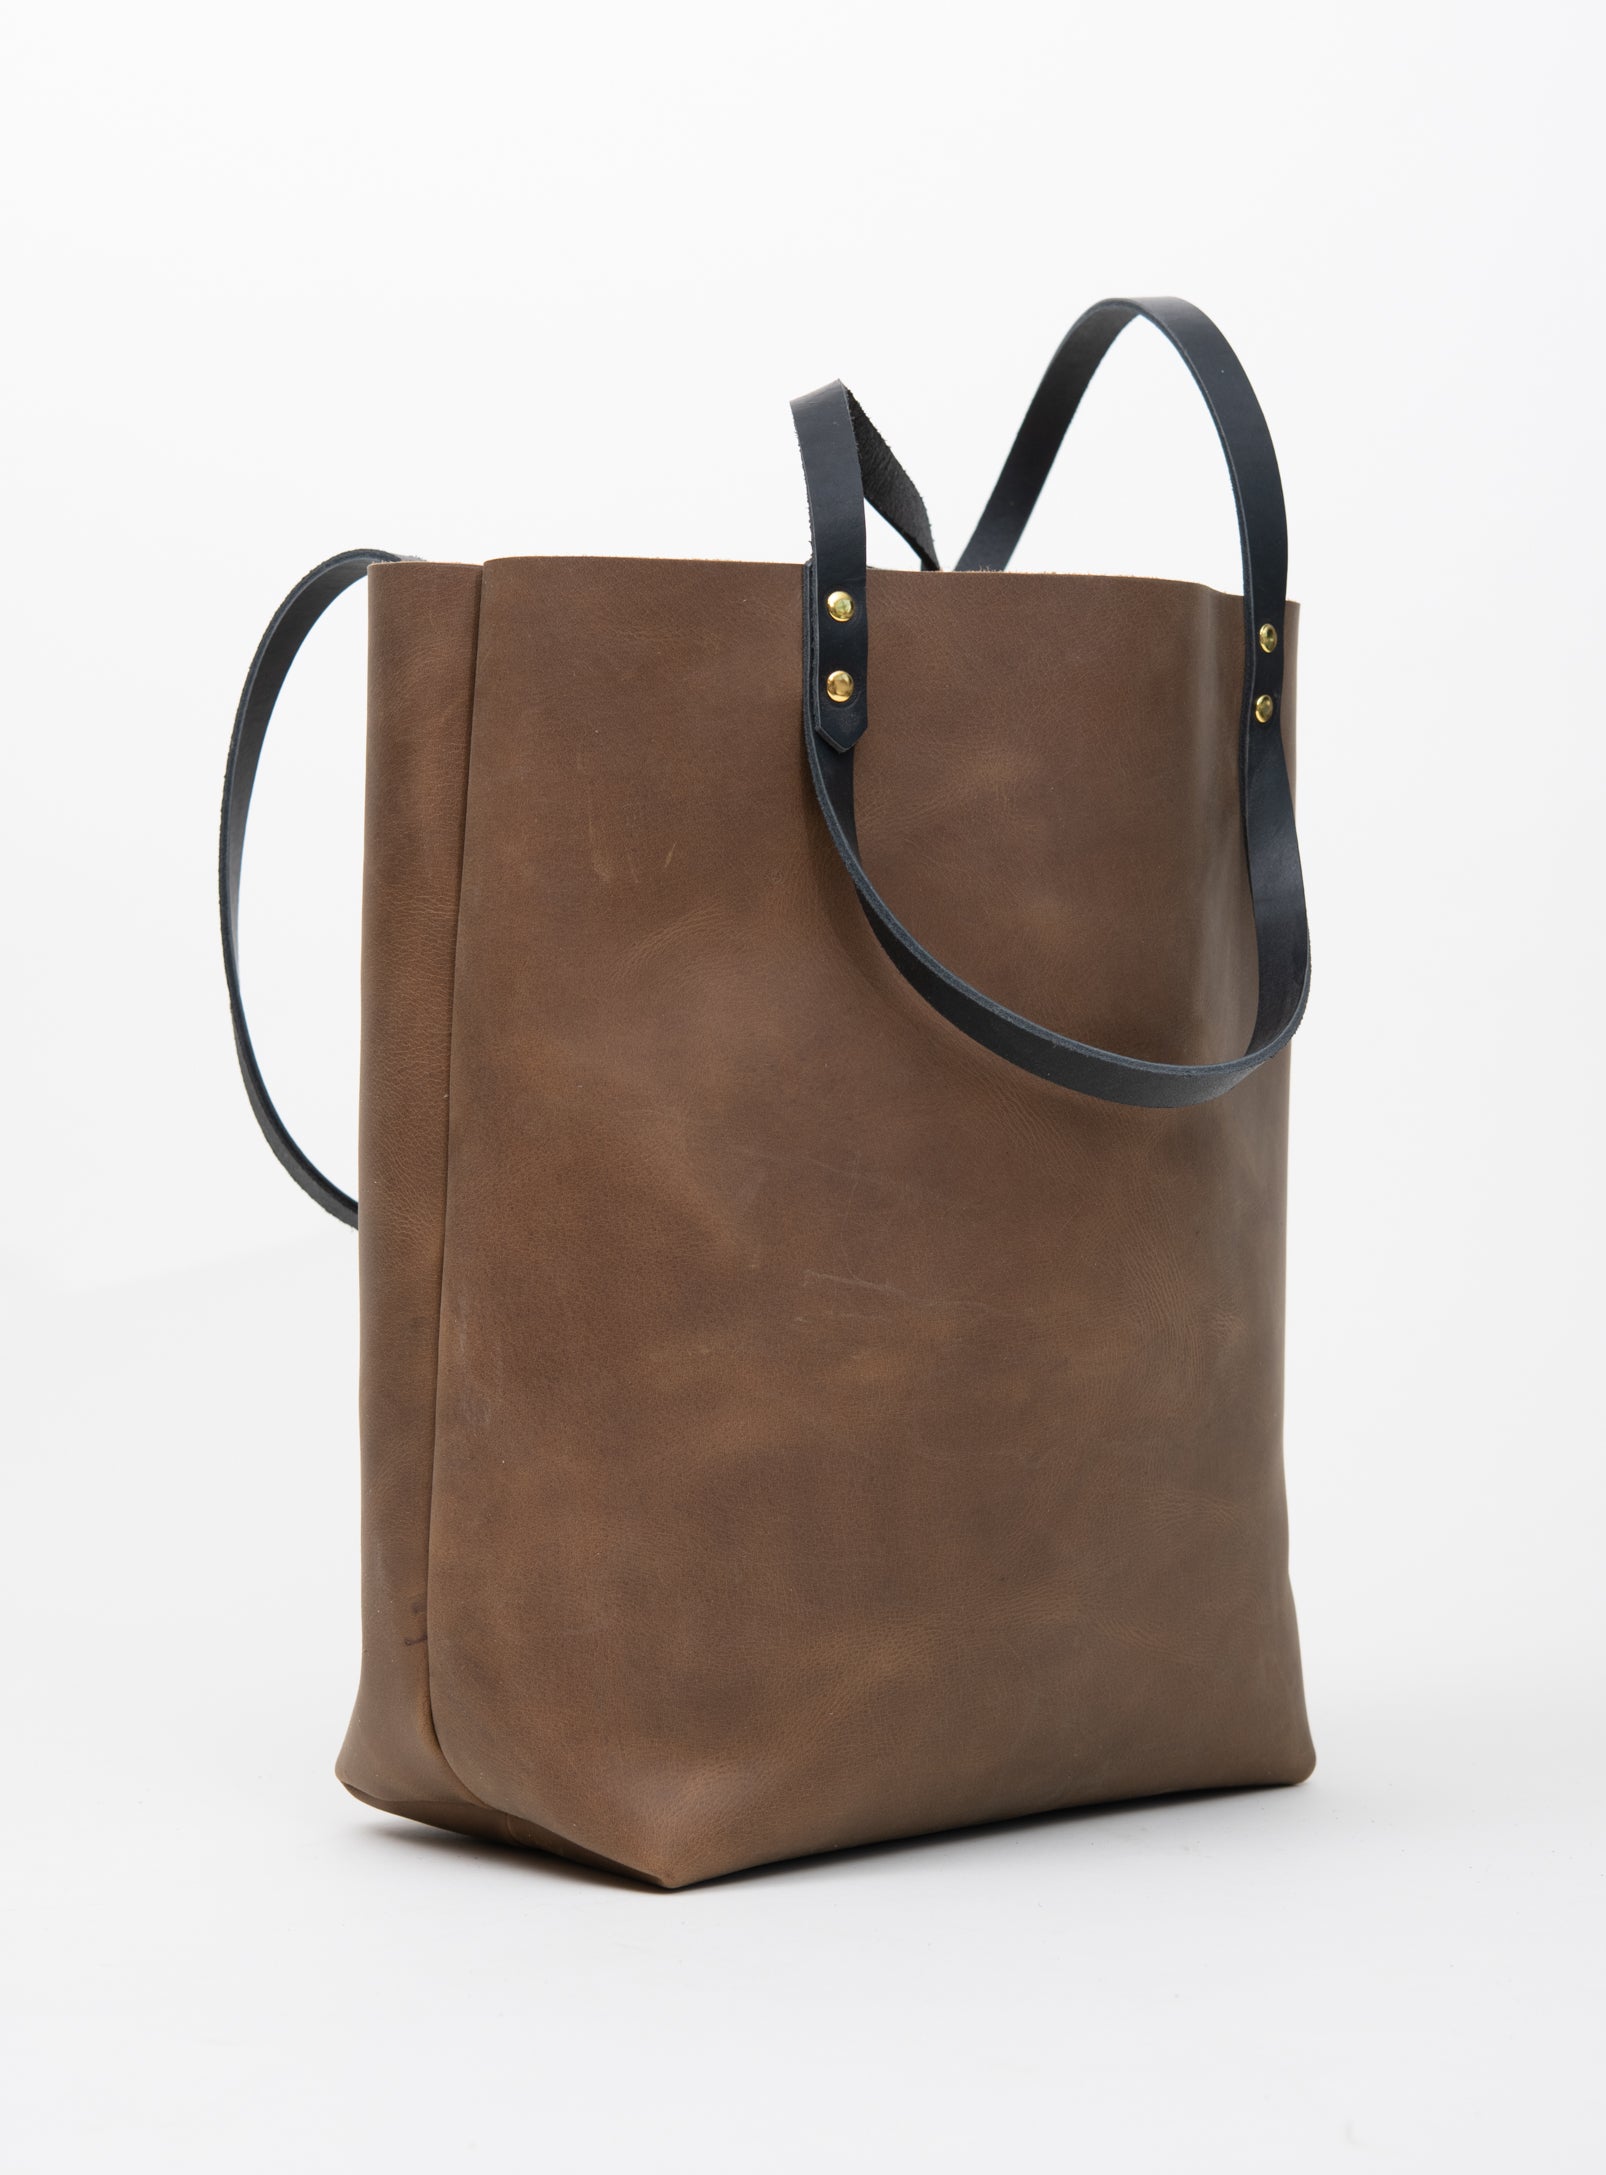 Veinage Molson brown leather minimalist tote bag 